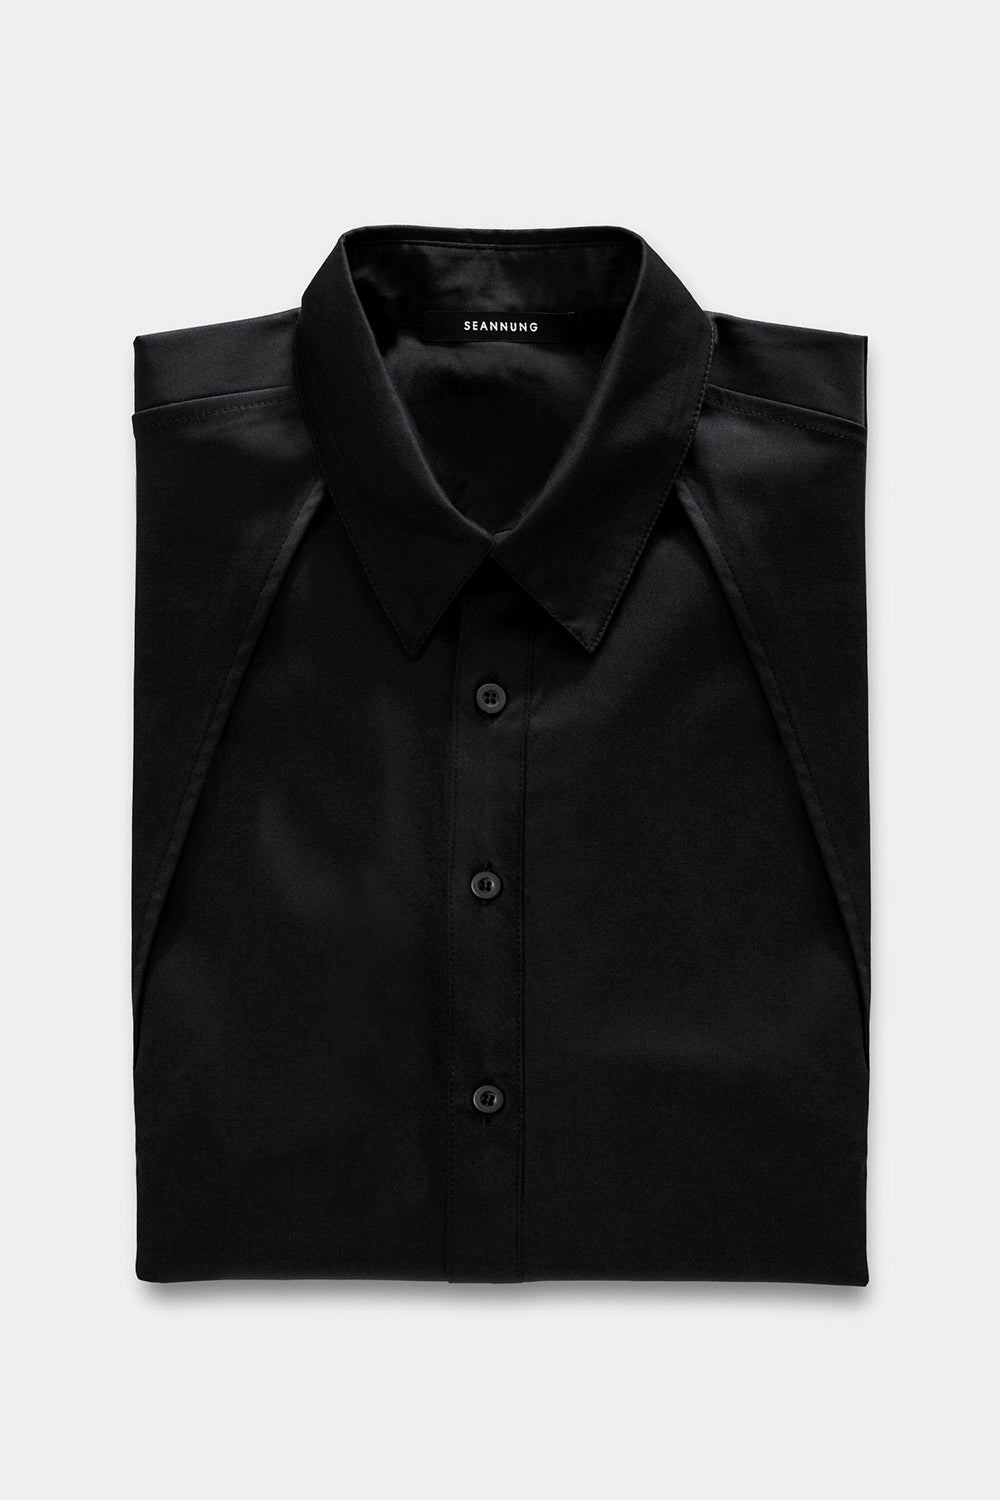 SEANNUNG -MEN-  Double Layered Shoulder Detail Shirt 層次披肩襯衫